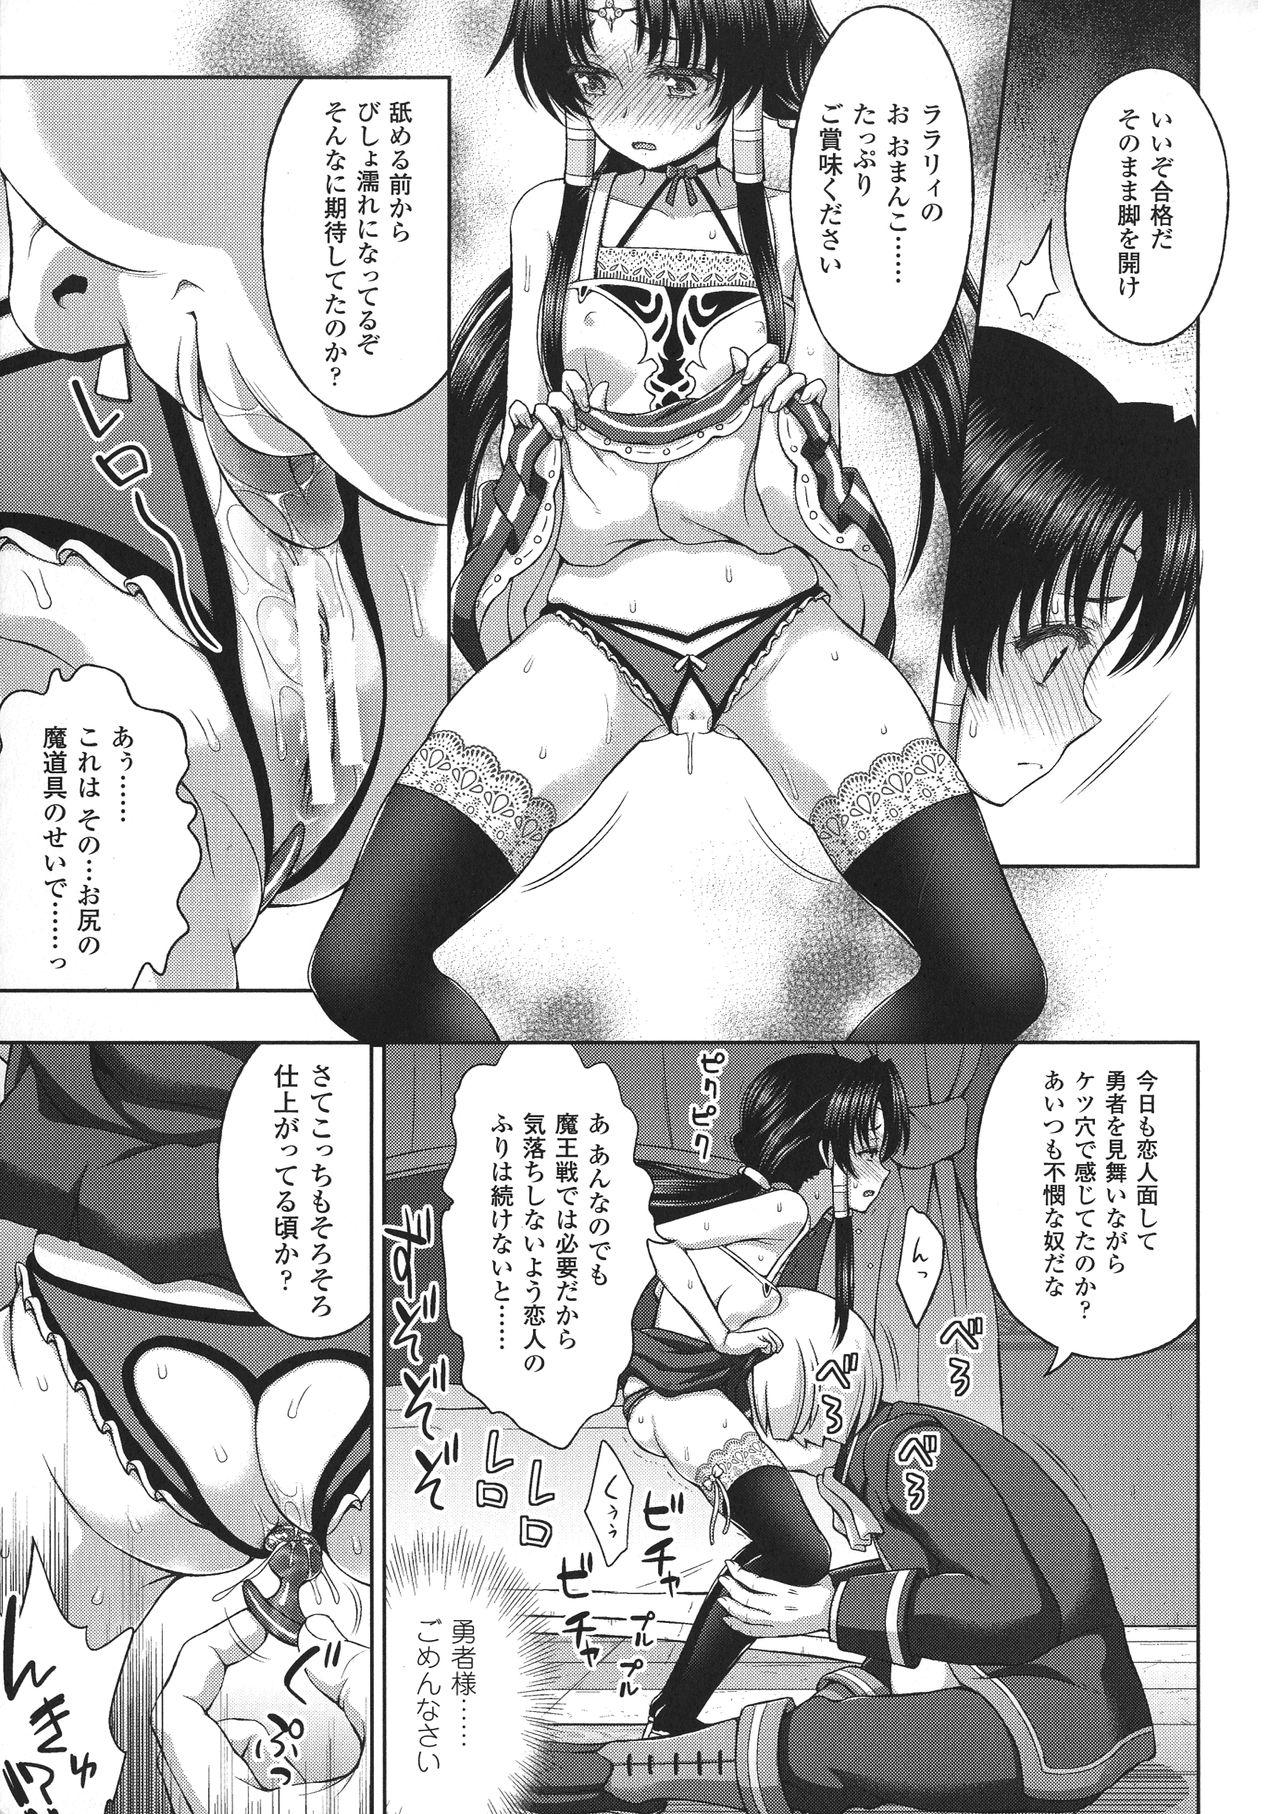 Seigi no Heroine Kangoku File DX Vol. 8 72